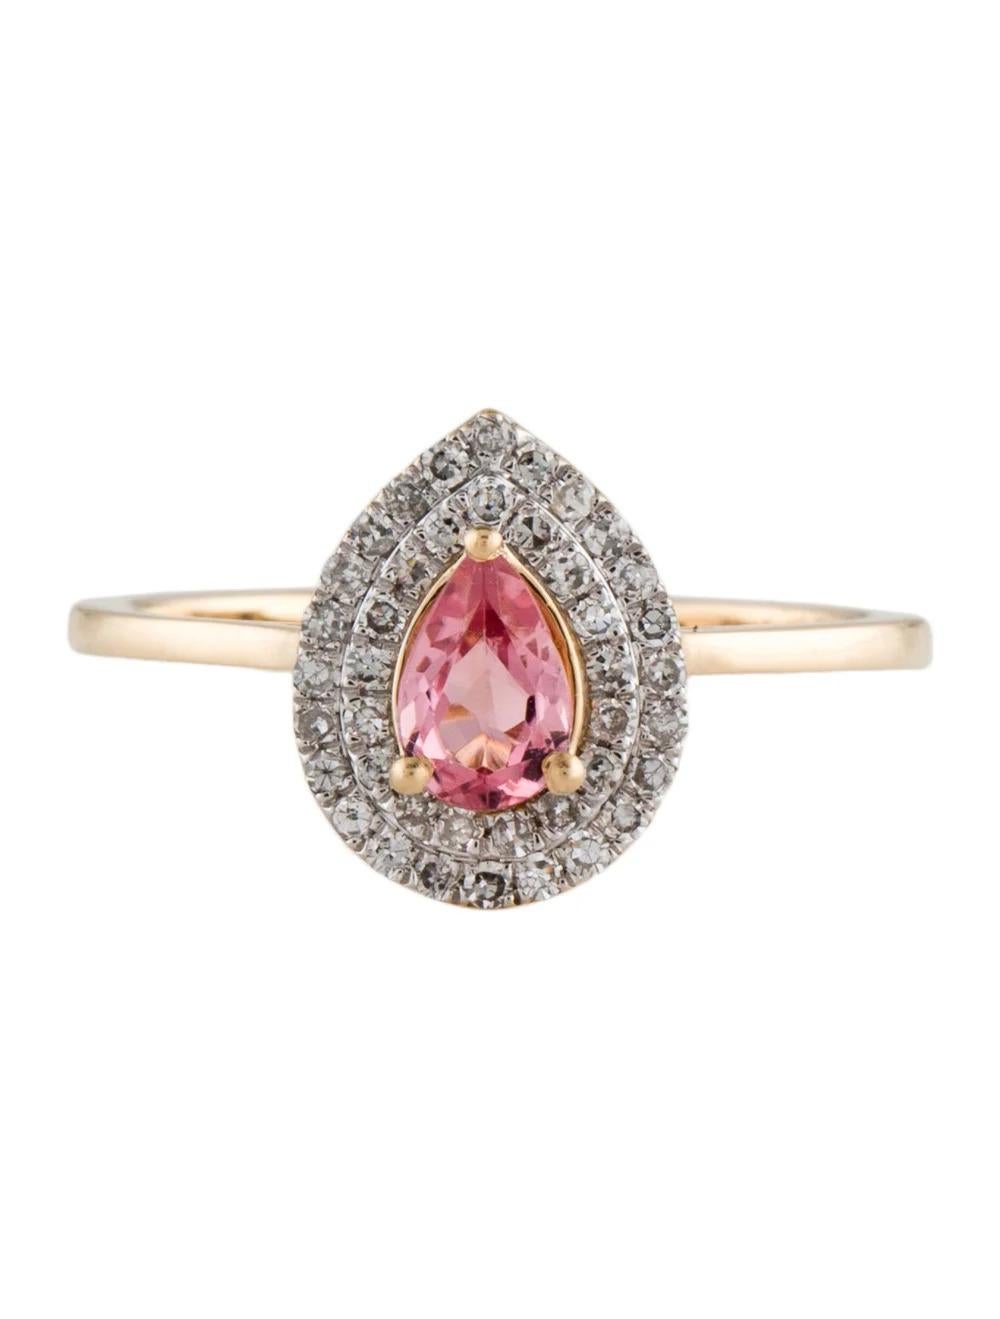 Pear Cut 14K Tourmaline & Diamond Cocktail Ring, Size 6.5 - Elegant Design, Fine Jewelry For Sale